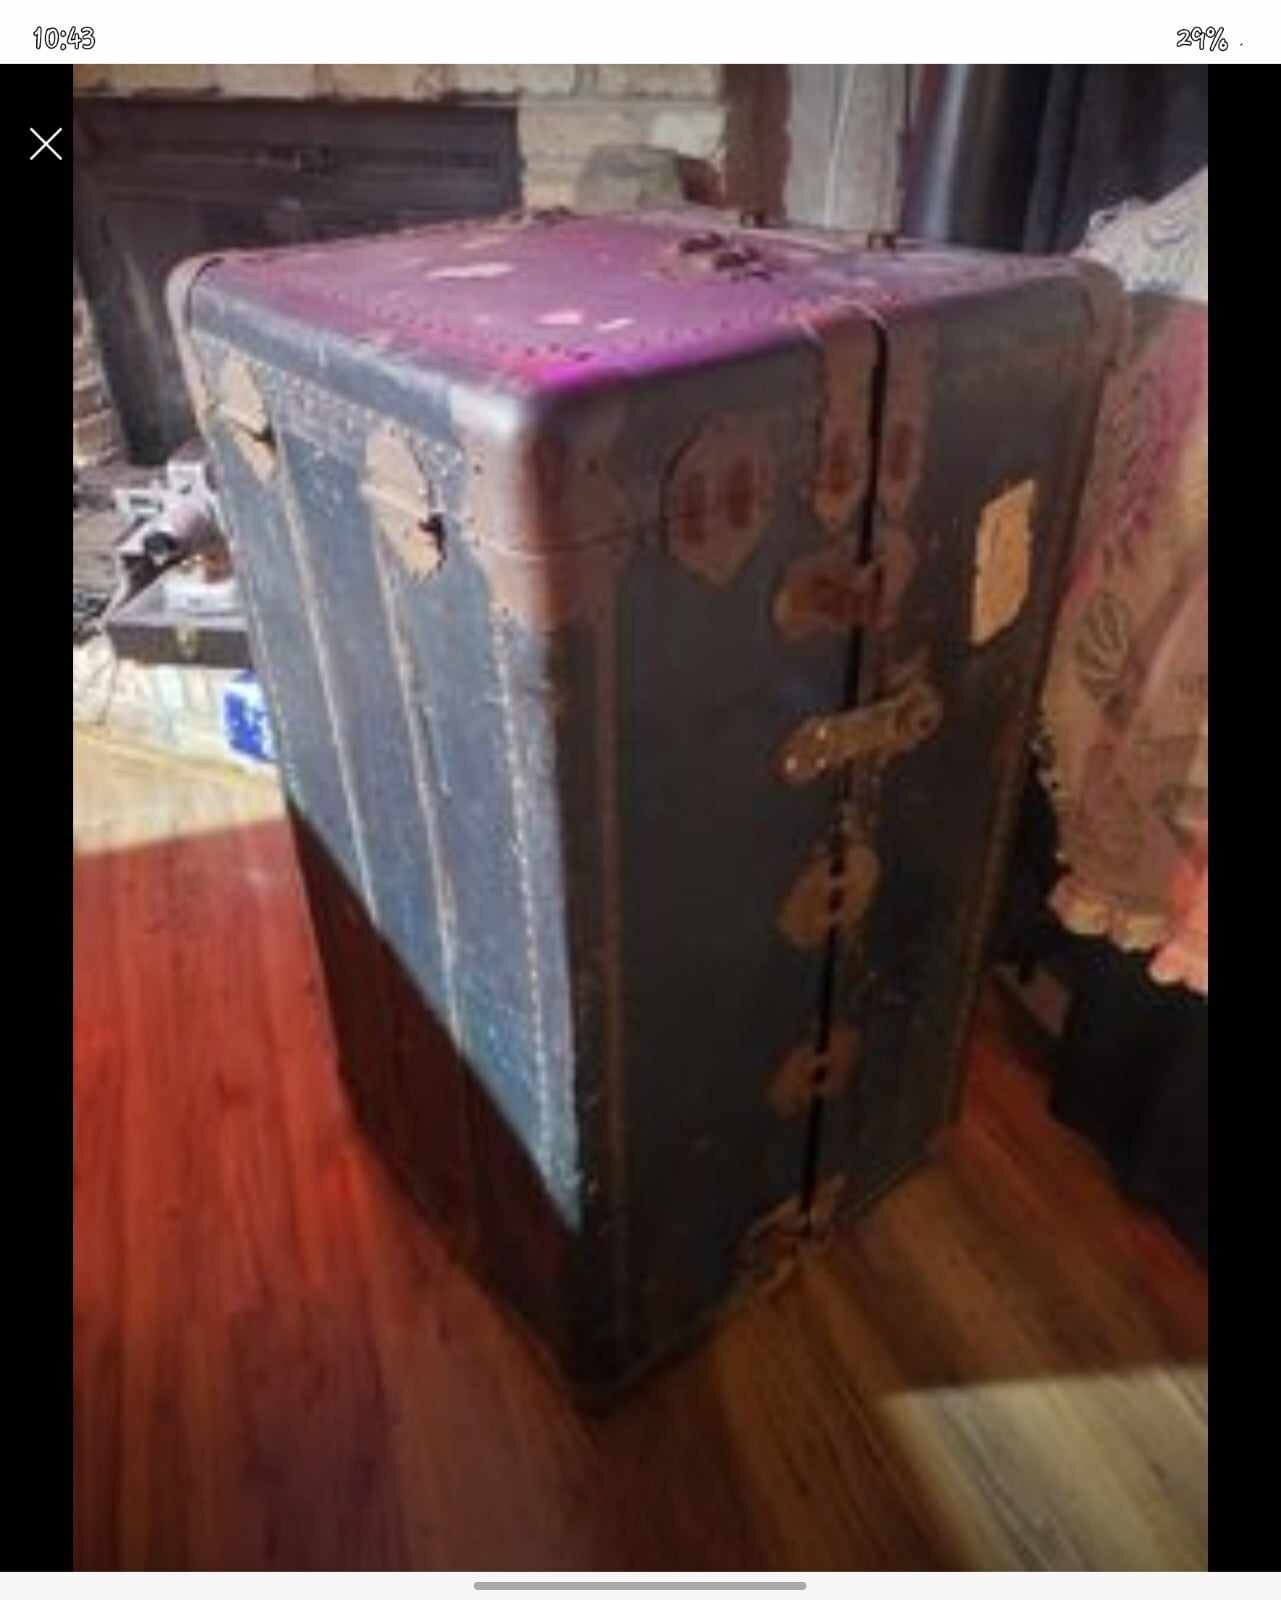 Lot - A large leather steamer trunk wardrobe, Oshkosh Trunks & Luggage